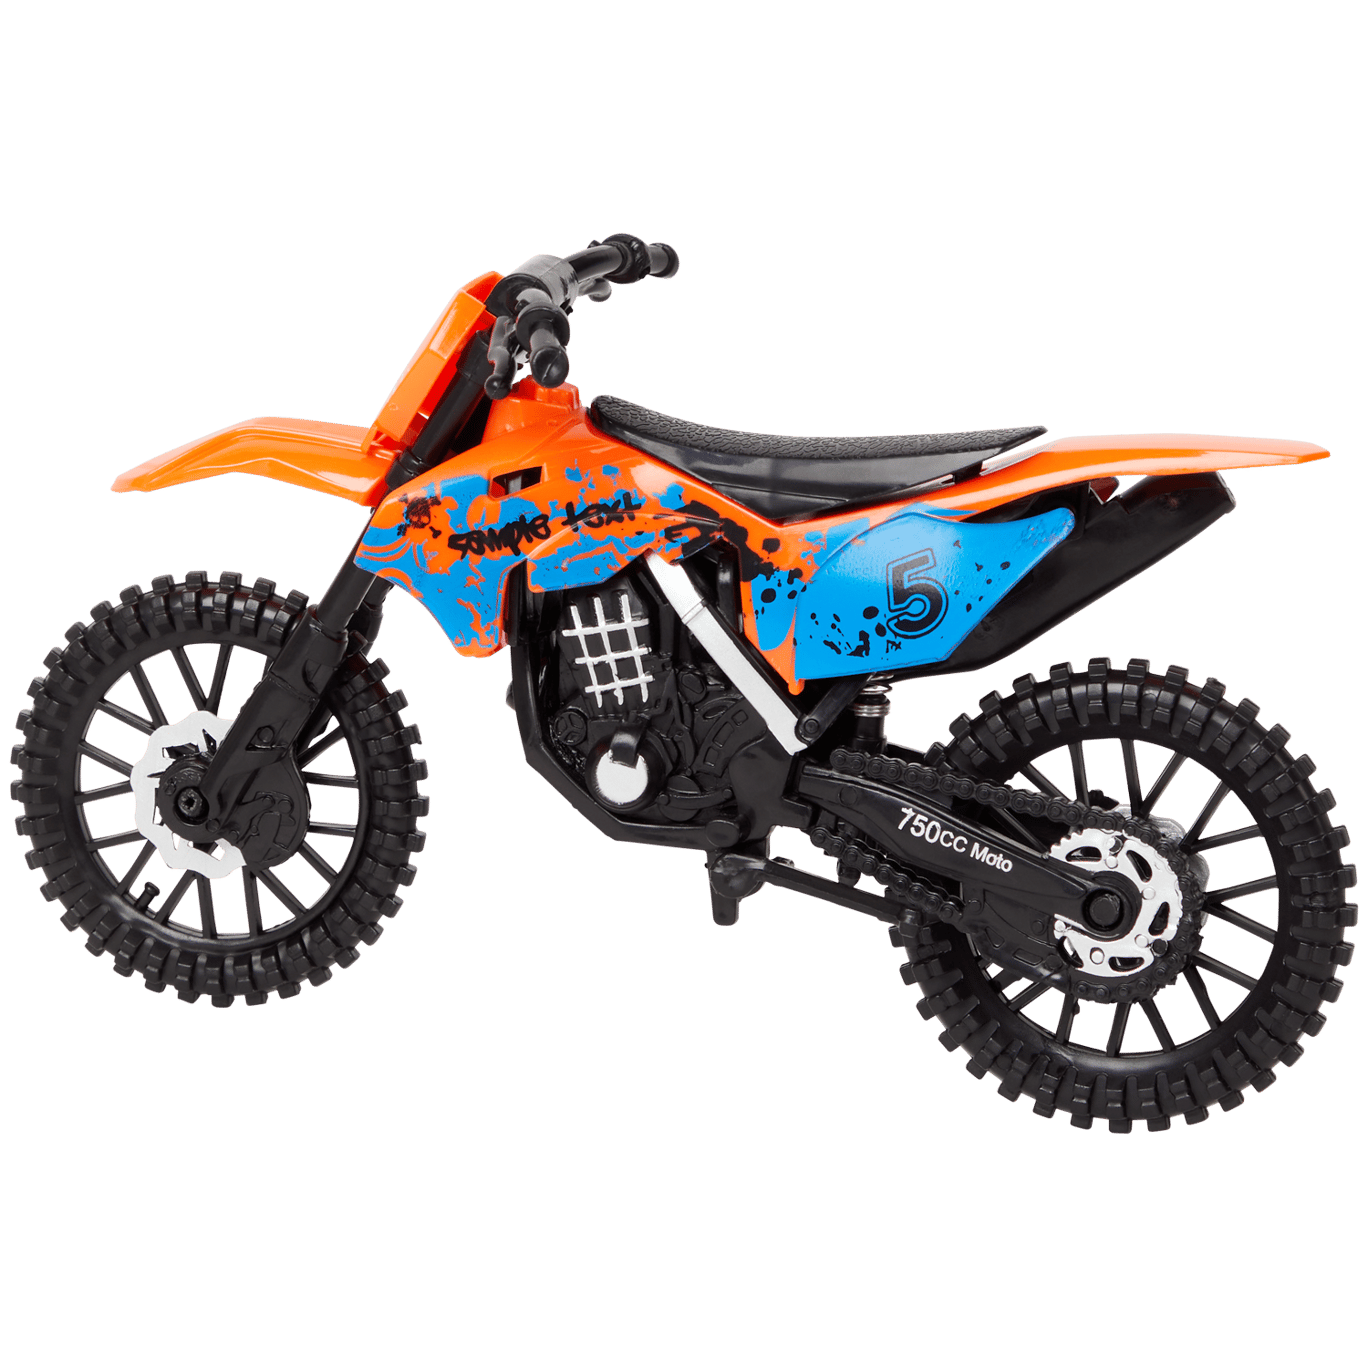 Spielzeug-Motocross-Motorrad